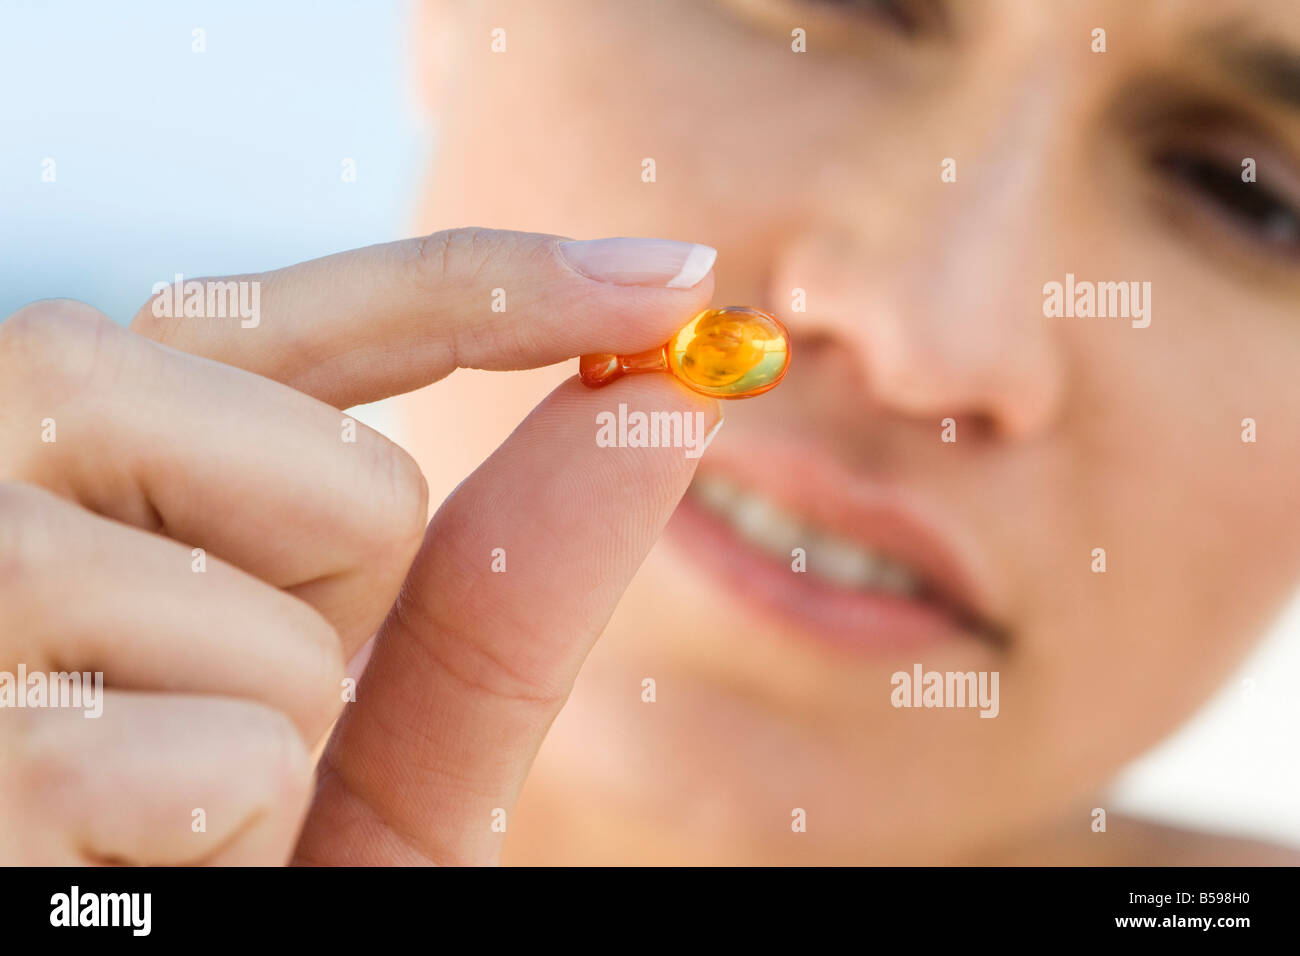 Sun tan vitamins wellness hi-res stock photography and images - Alamy